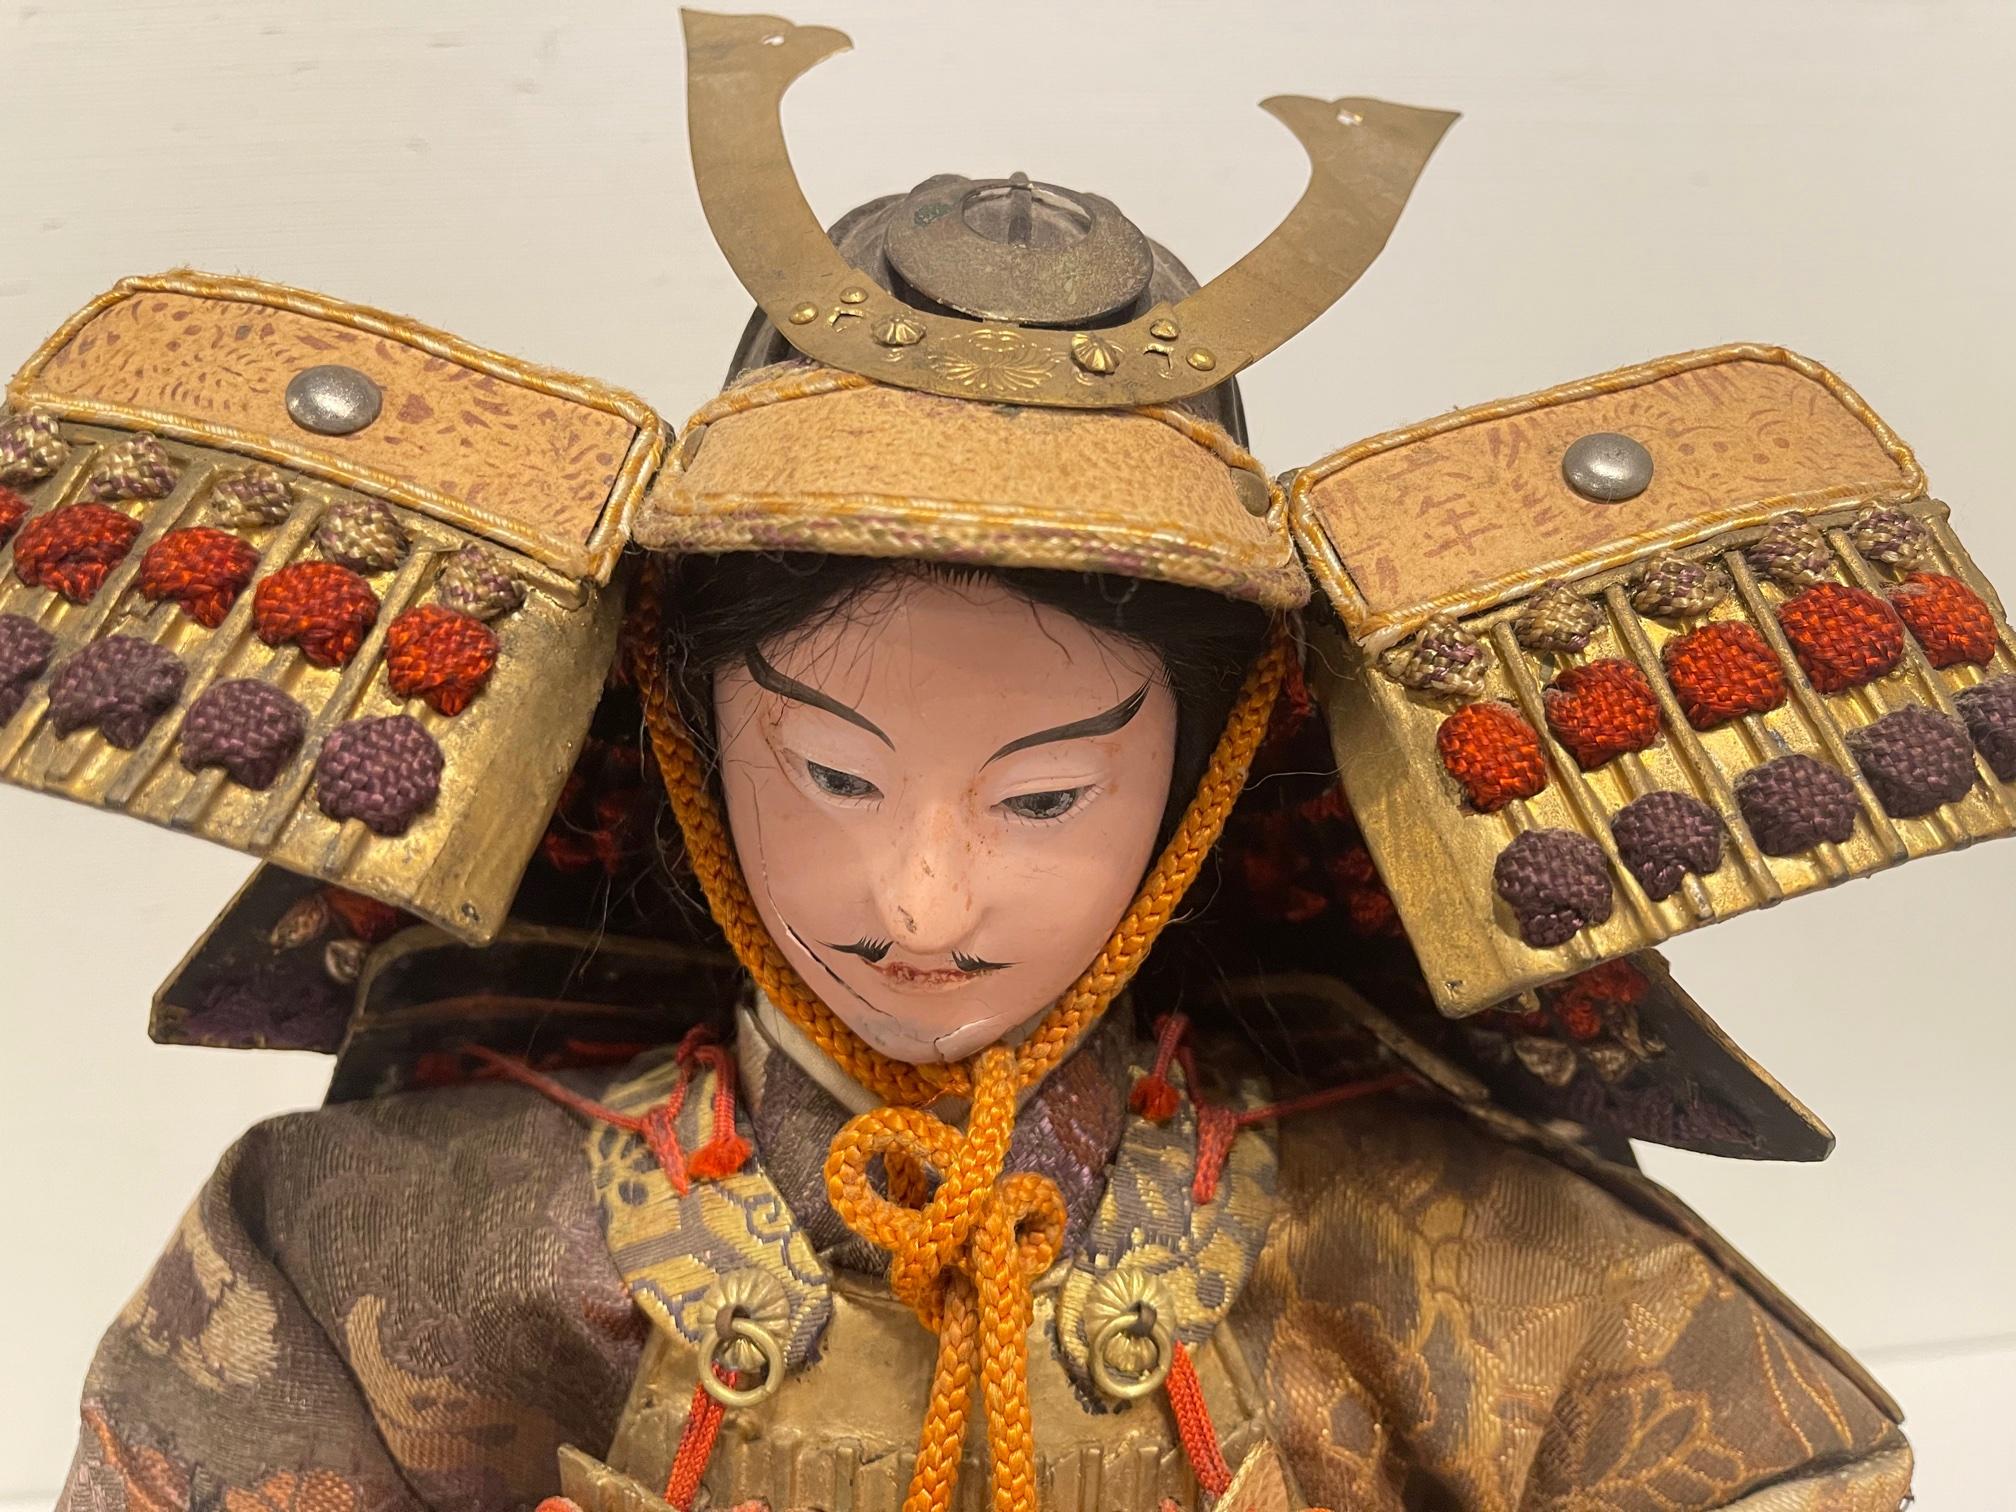 Japanese Samurai Doll or Figure, Meiji Period, Circa 1870s 4